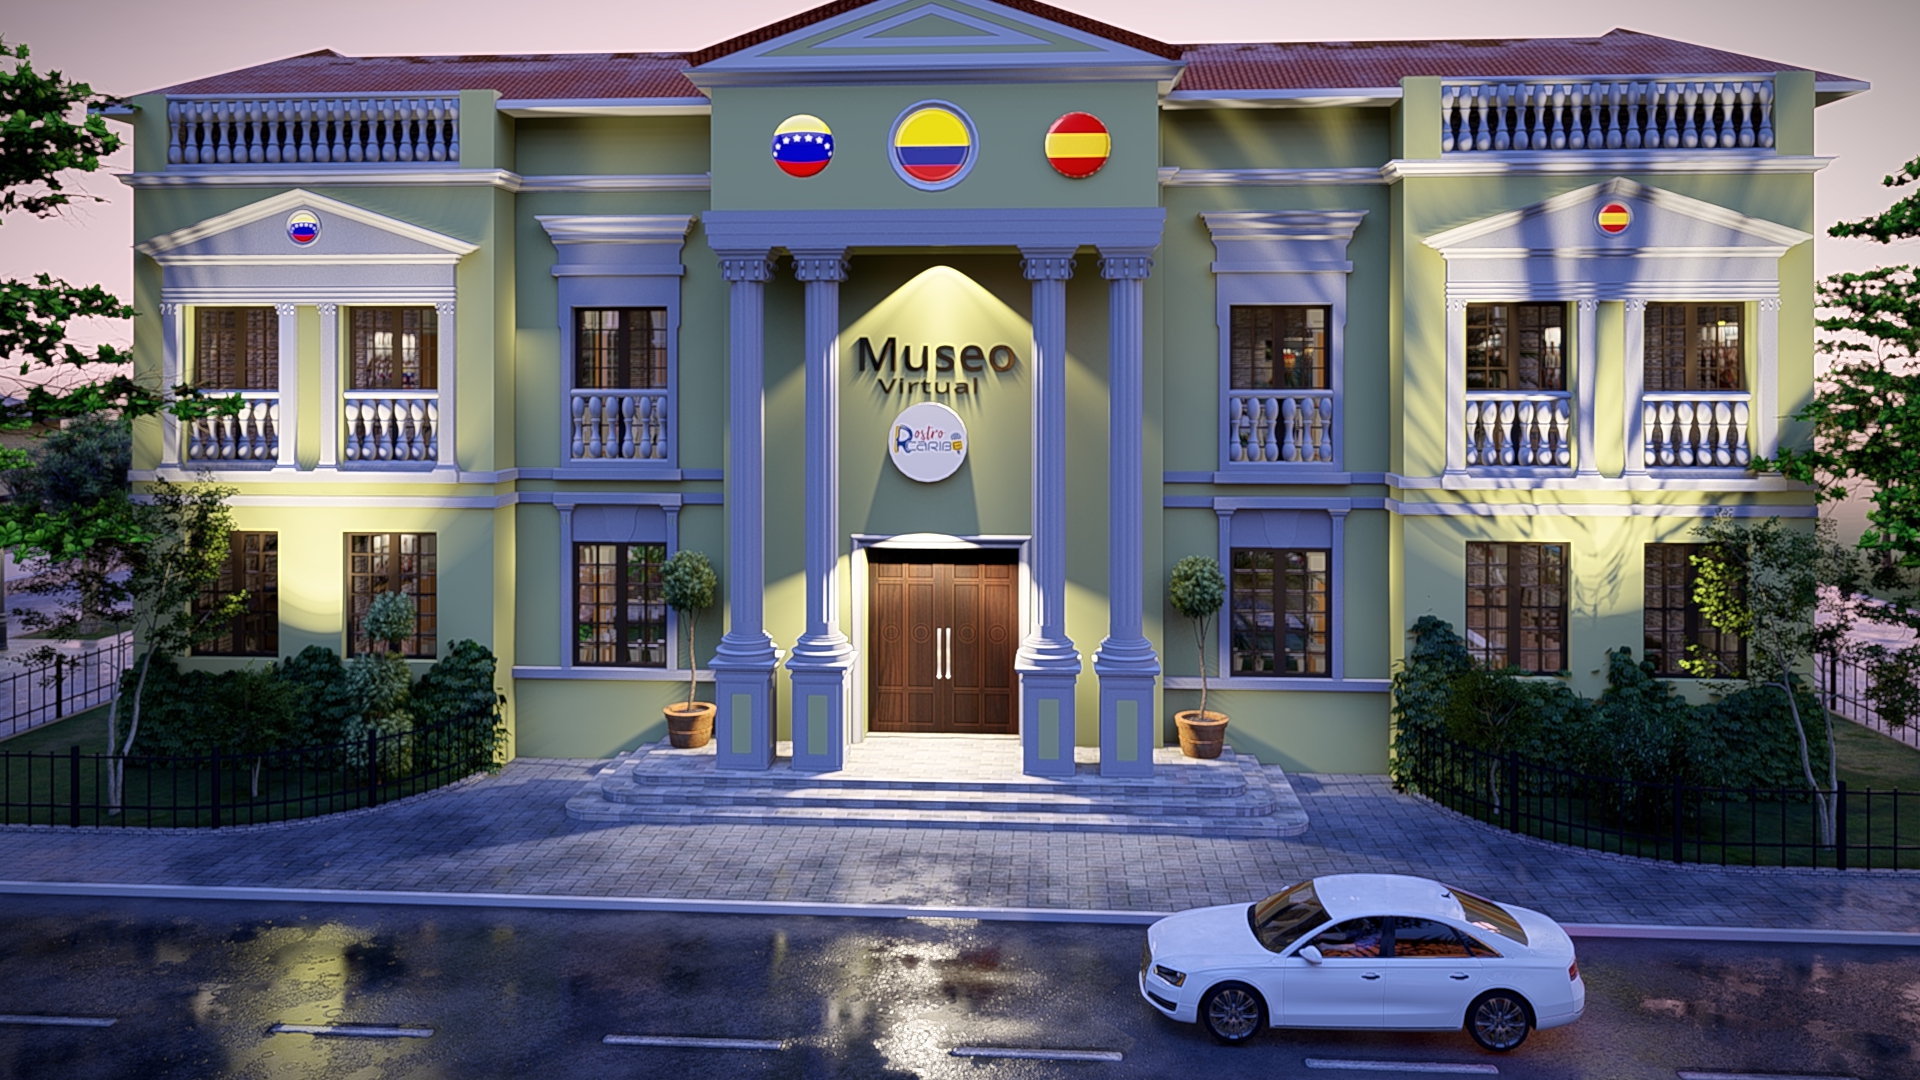 Museo Virtual Rostro Caribe